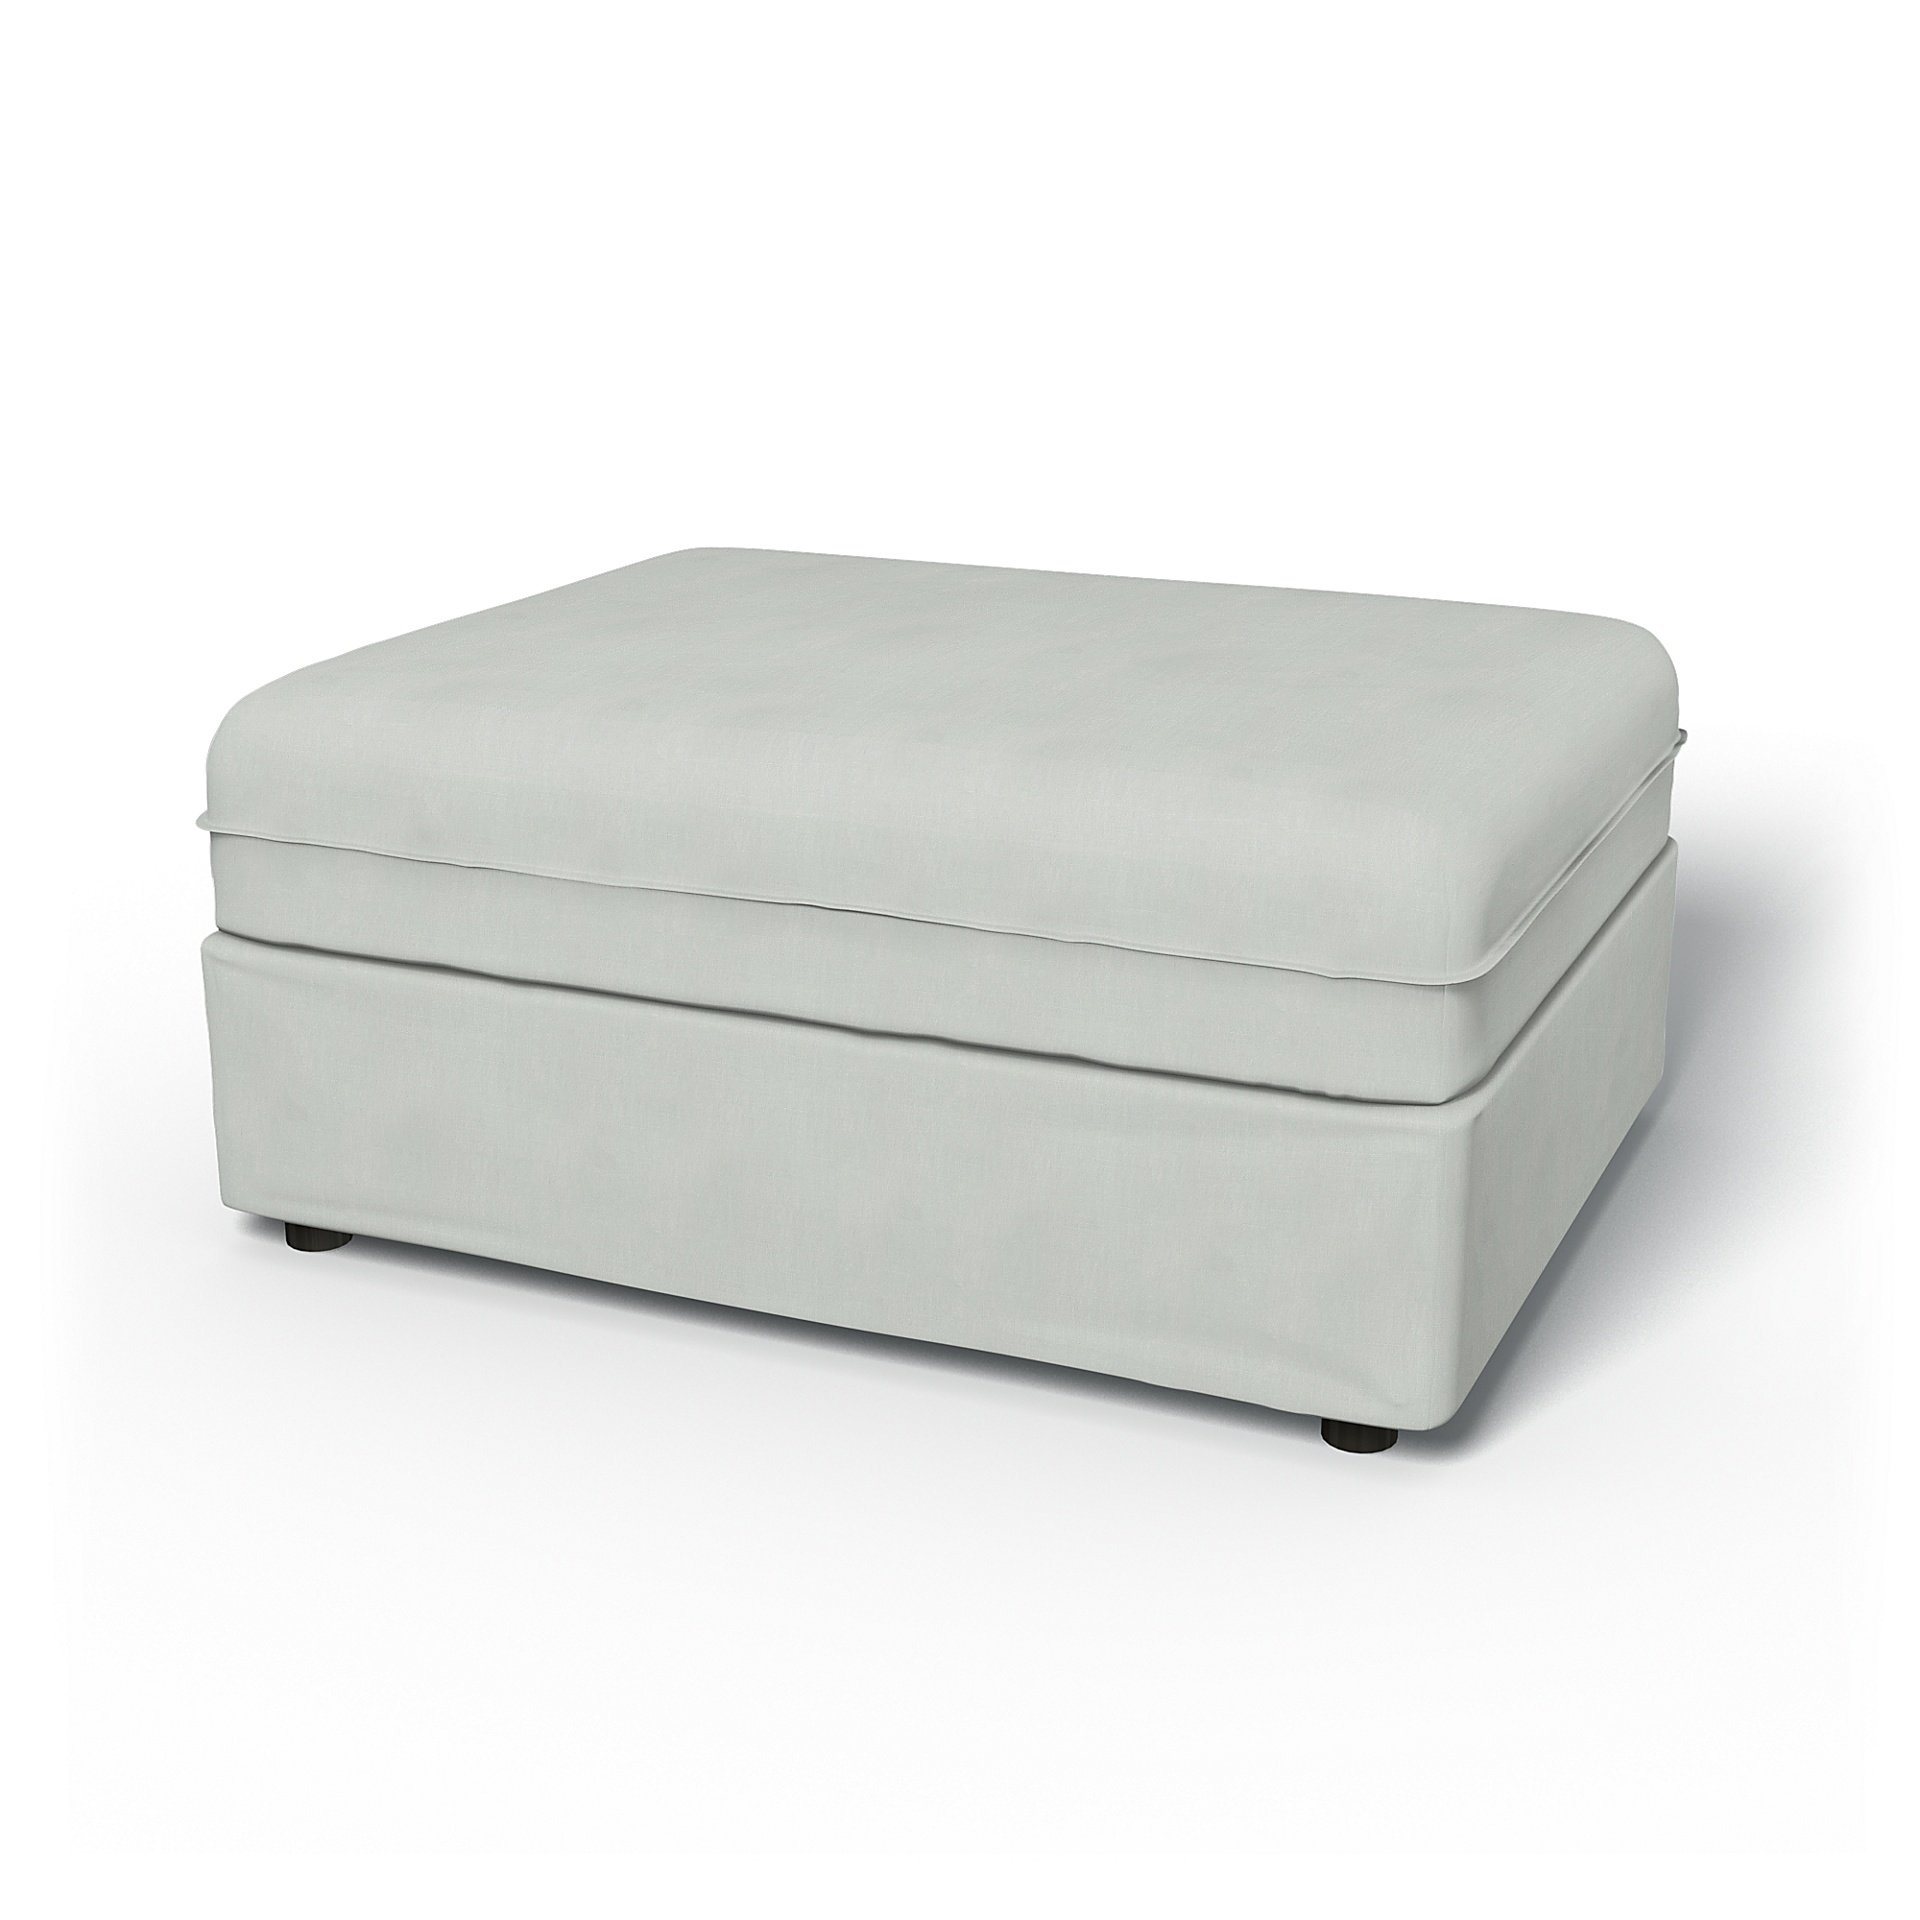 IKEA - Vallentuna Seat Module Cover 100x80cm 39x32in, Silver Grey, Linen - Bemz